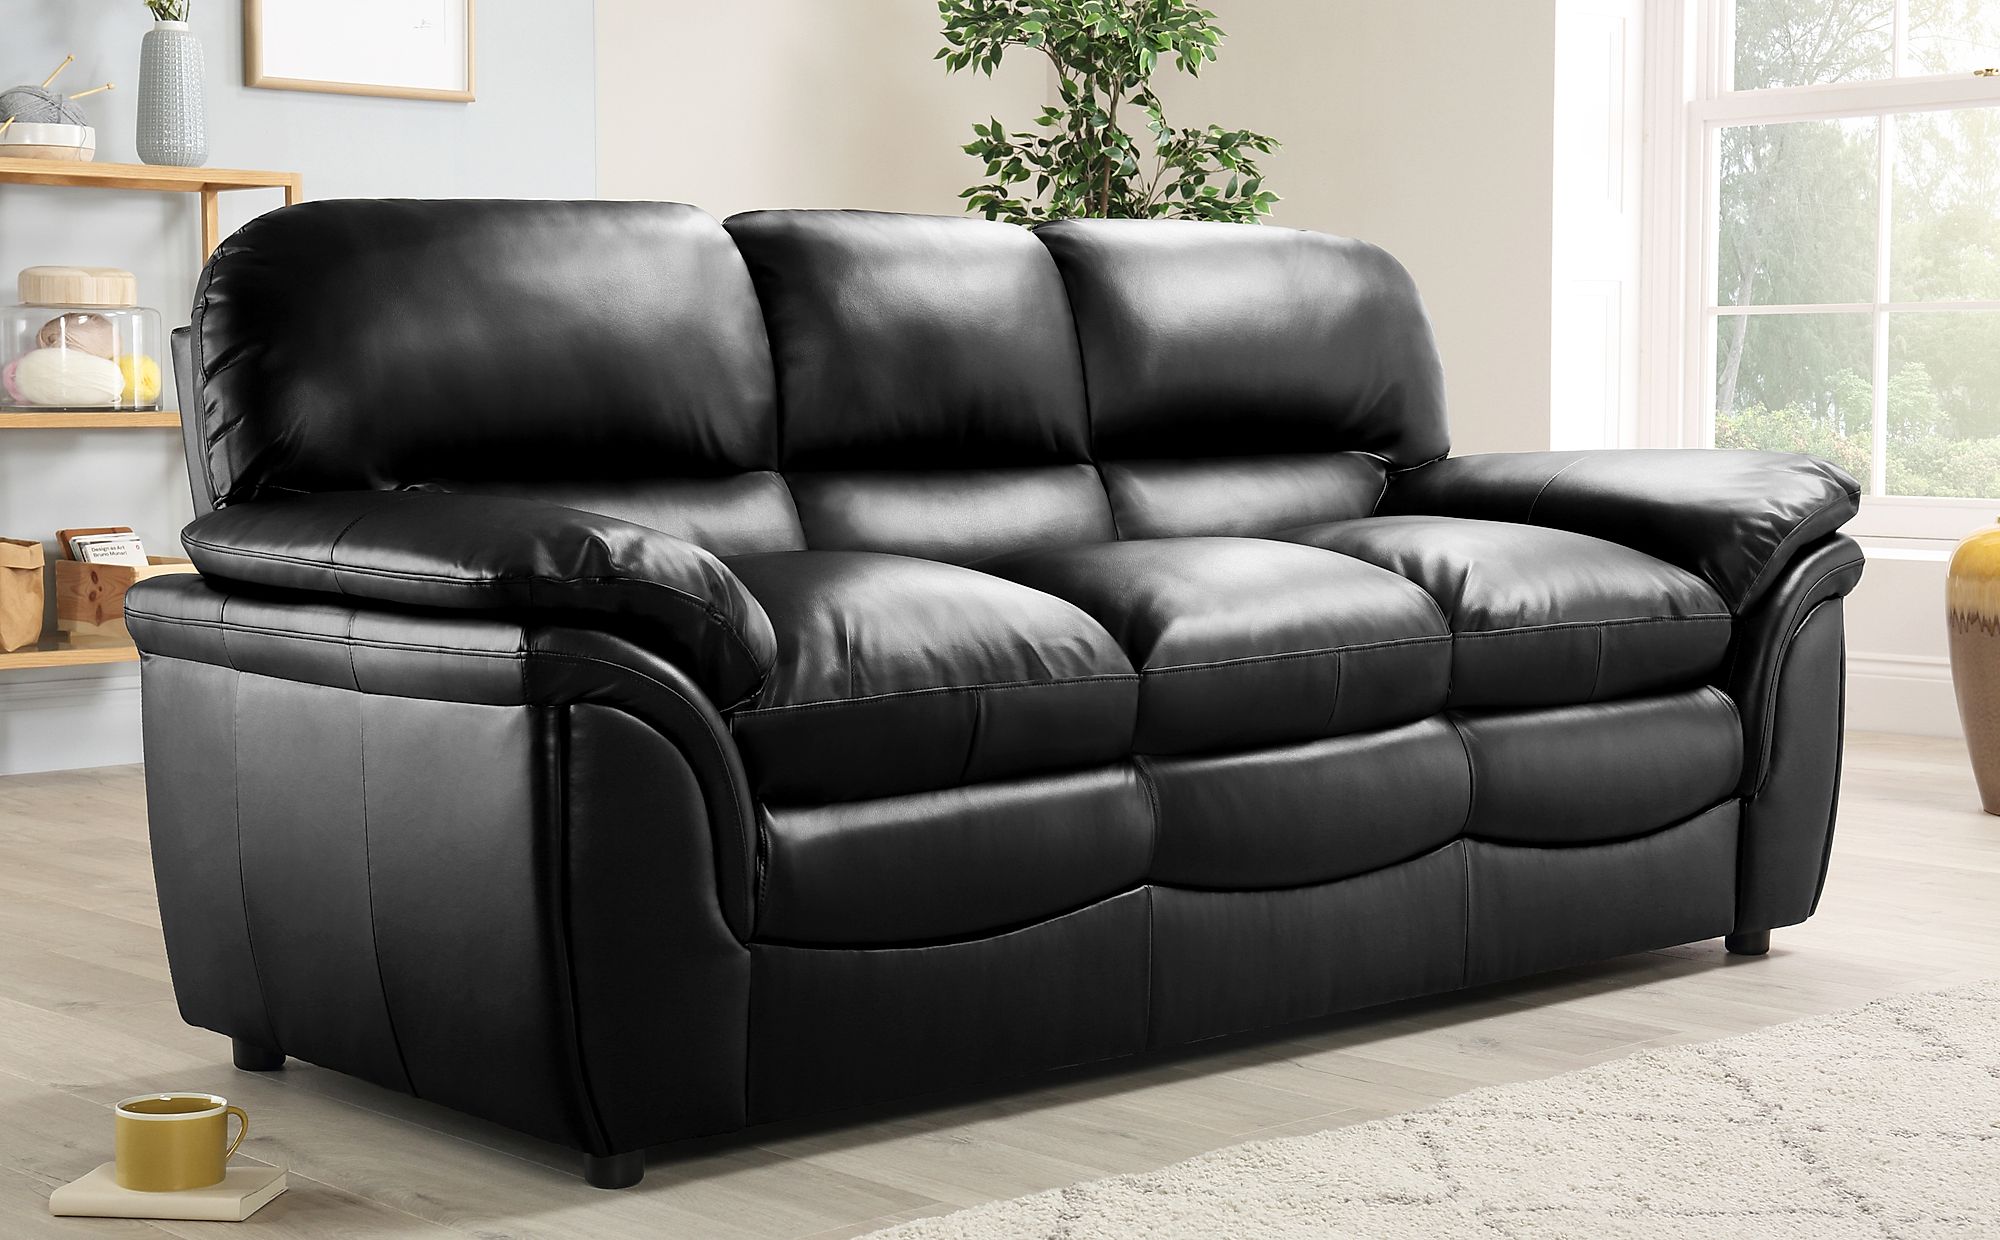 buy a black leather sofa